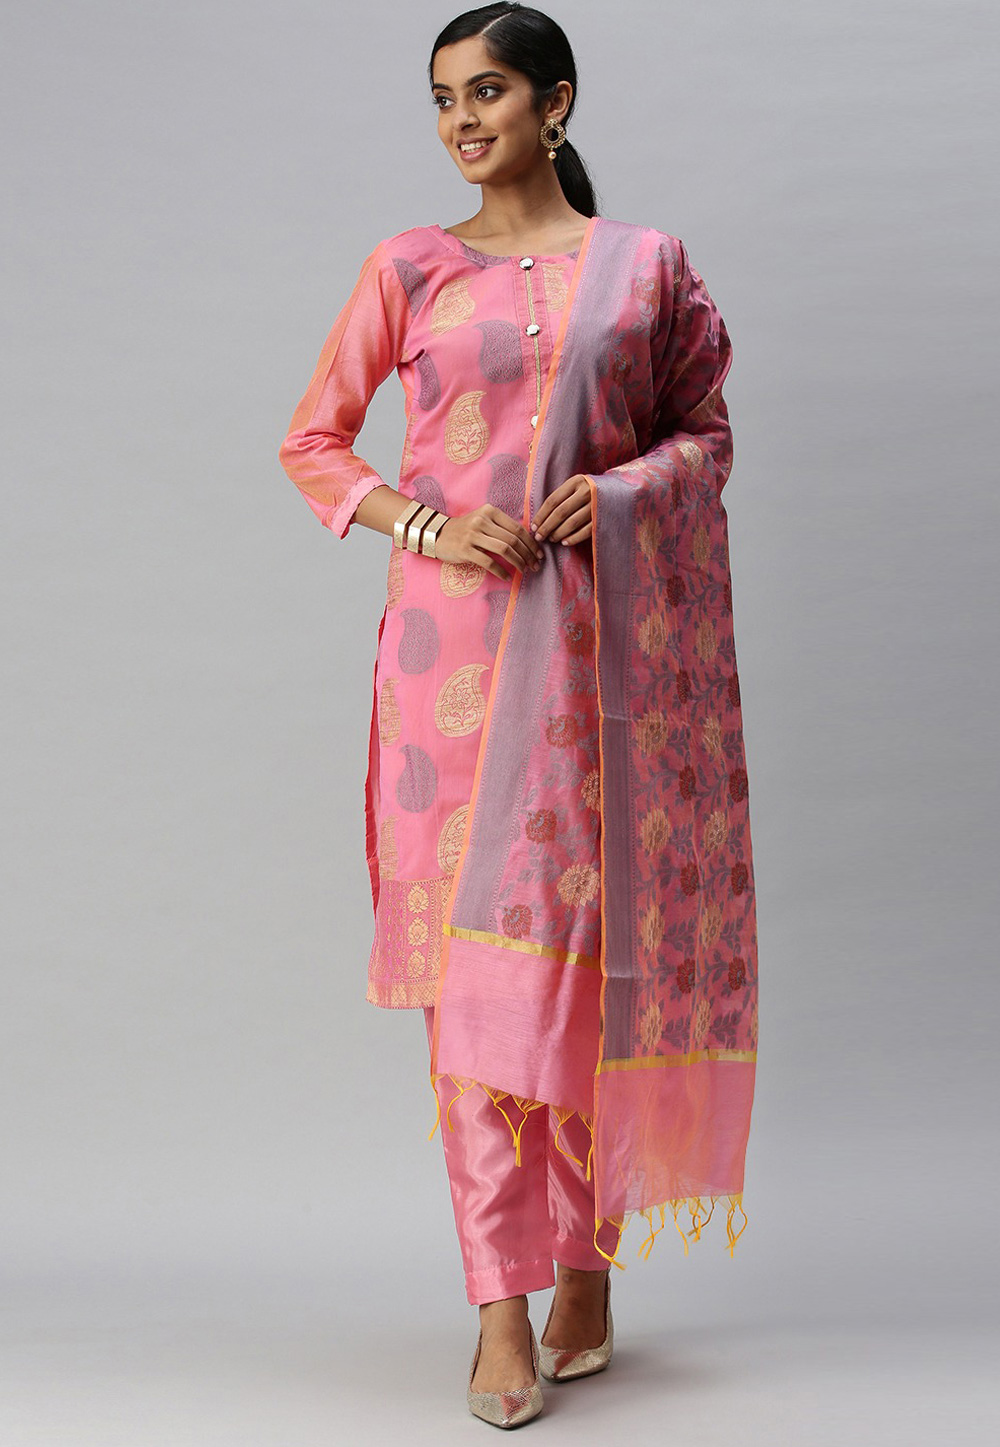 Trending Banarsi Suits Fabric & Designs in Pakistan | PakStyle Fashion Blog